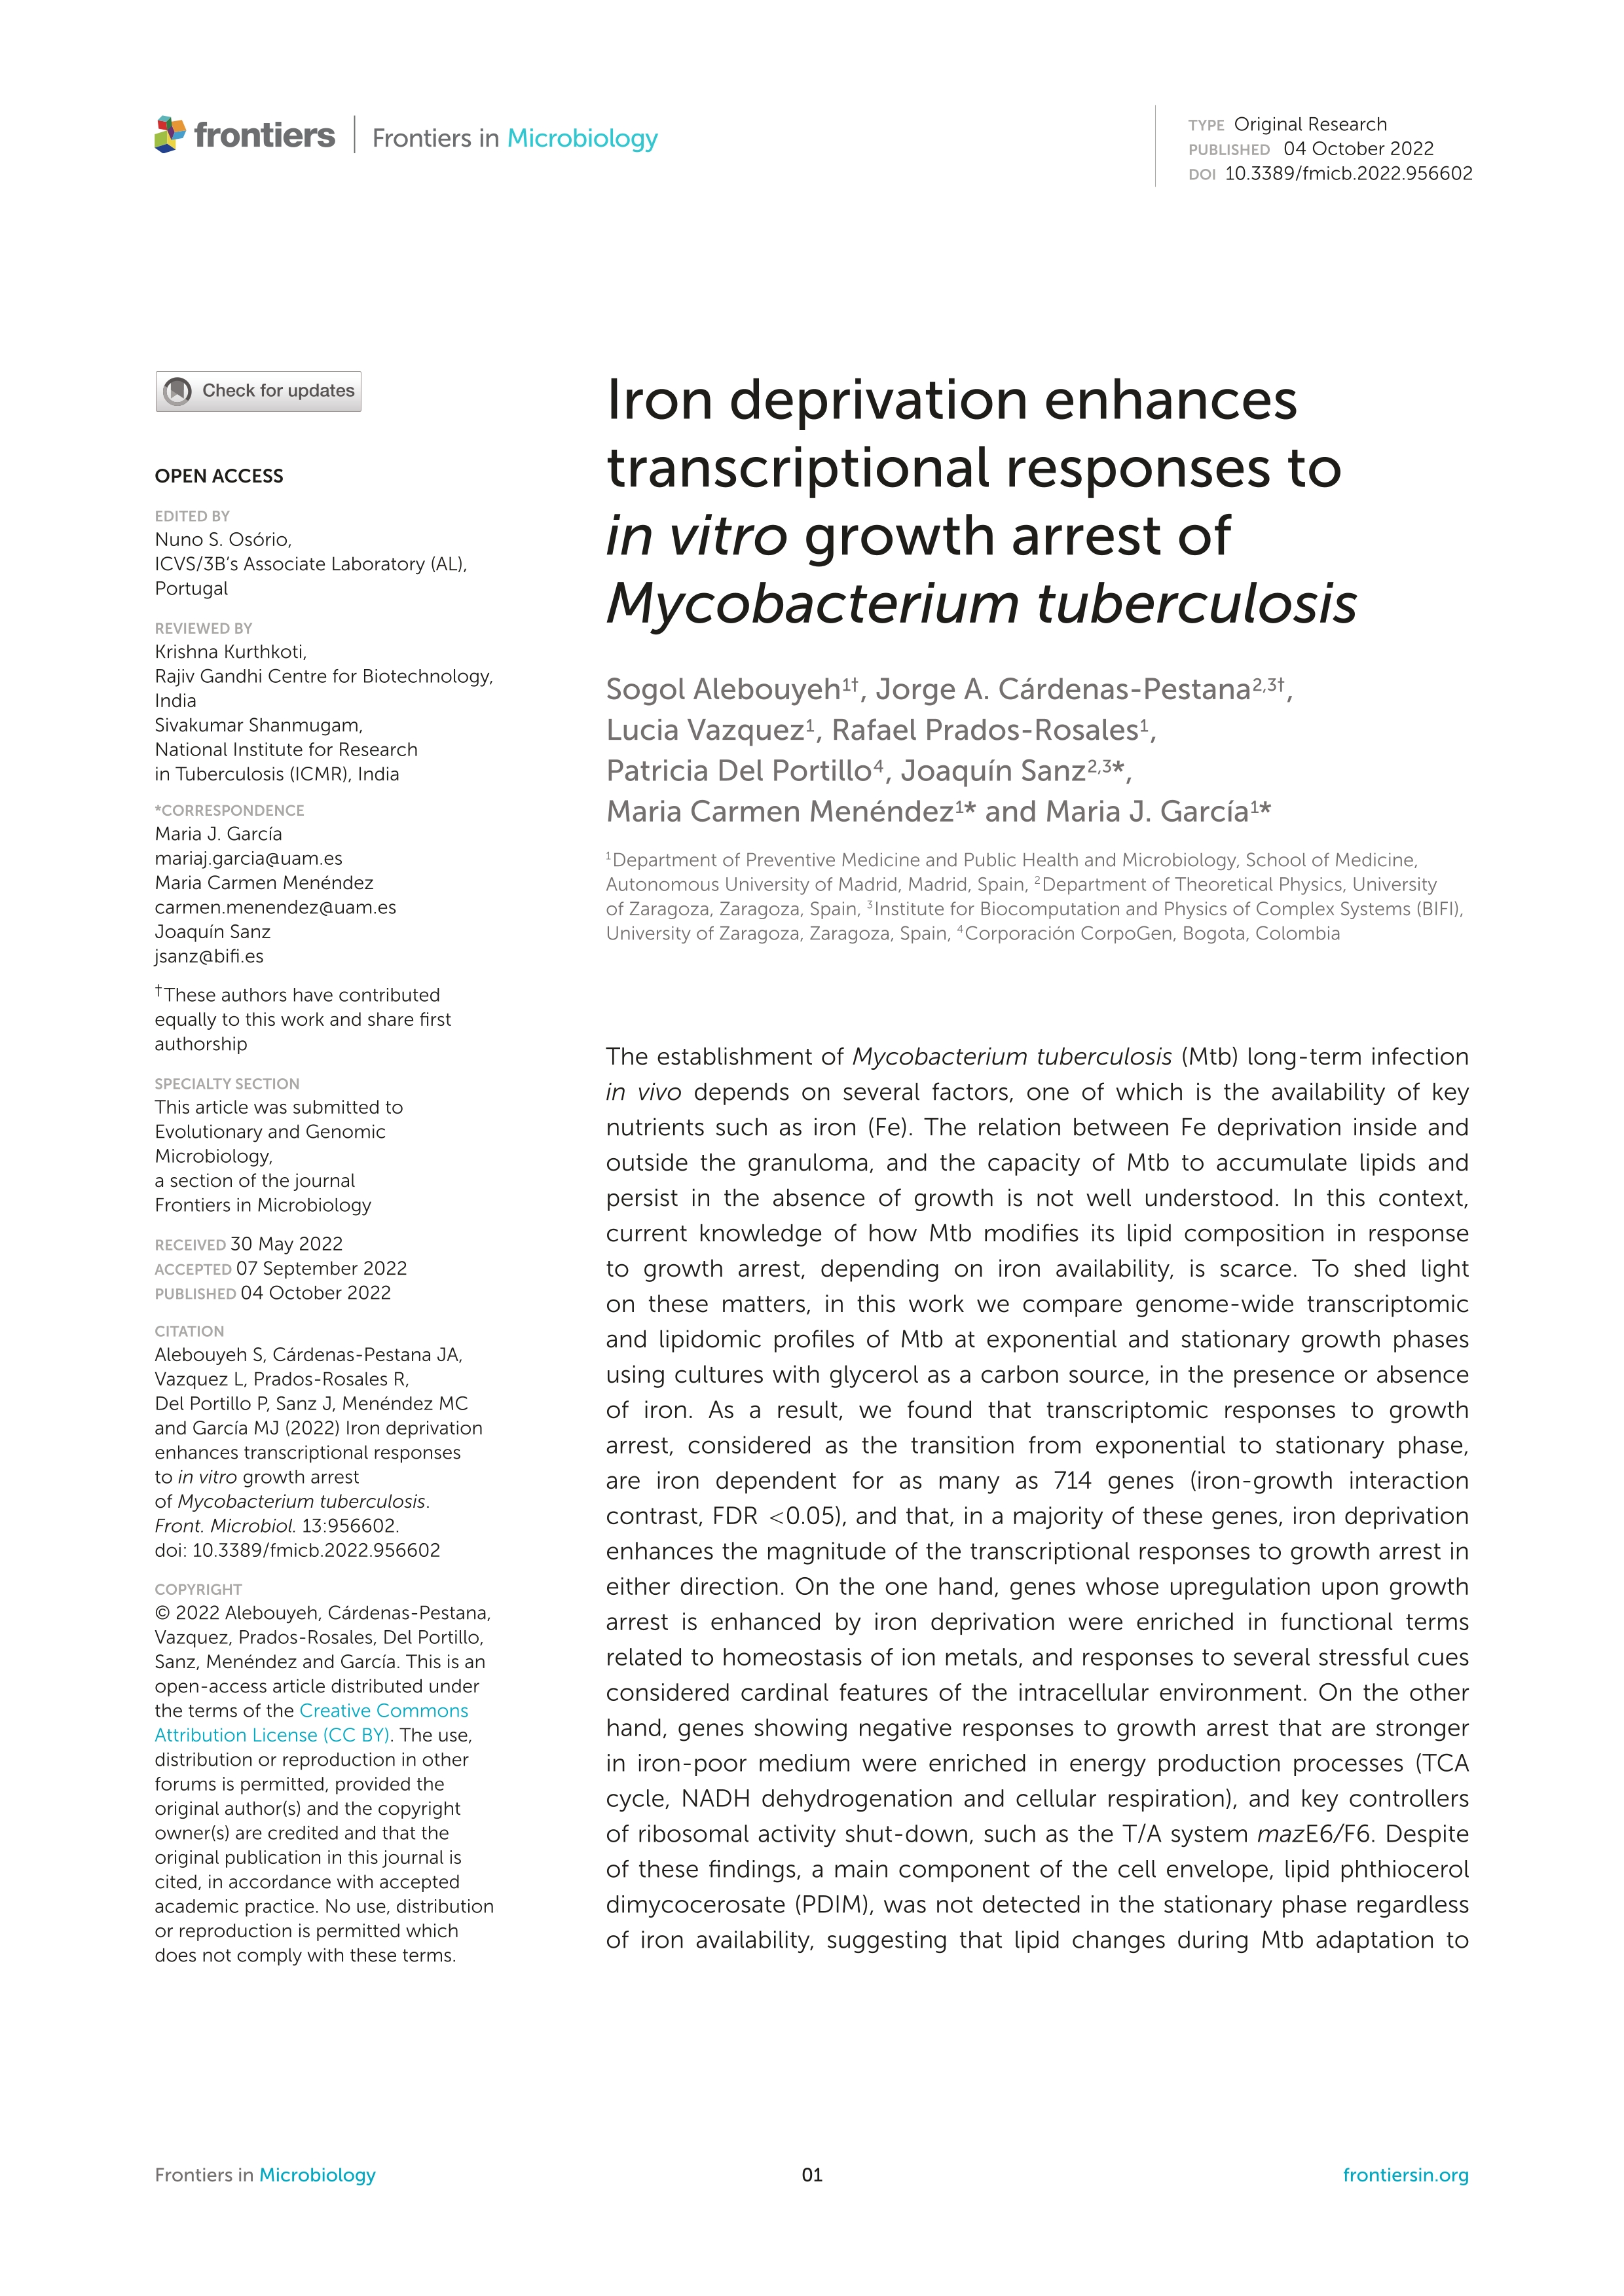 Iron deprivation enhances transcriptional responses to in vitro growth arrest of Mycobacterium tuberculosis